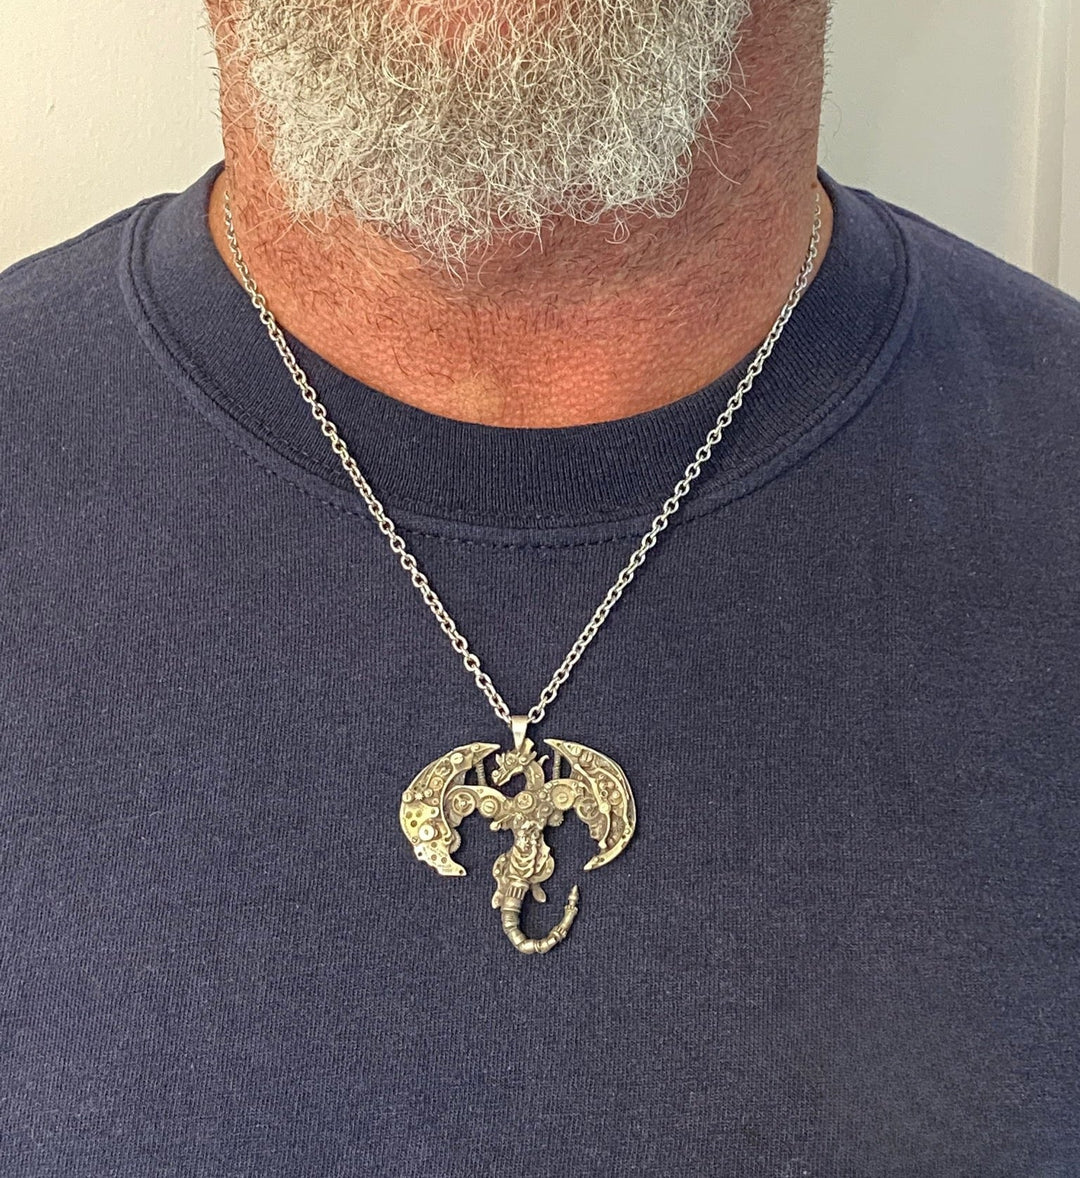 Unique Dragon Pendant Necklace | Antique Watch Parts Jewelry | Sterling Silver or Bronze